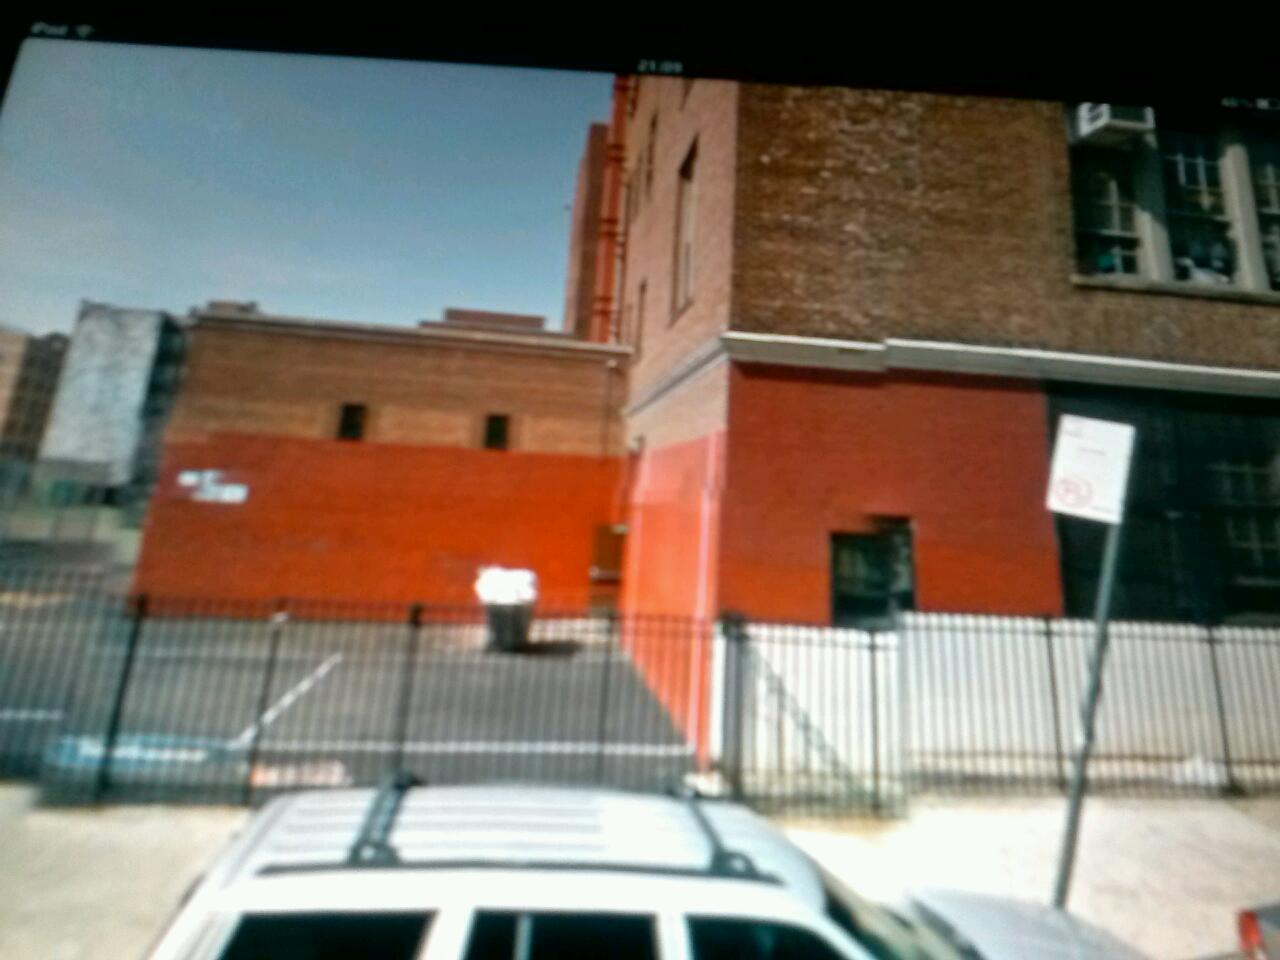 Photo of P.S. 067 Mohegan School in Bronx City, New York, United States - 1 Picture of Point of interest, Establishment, School